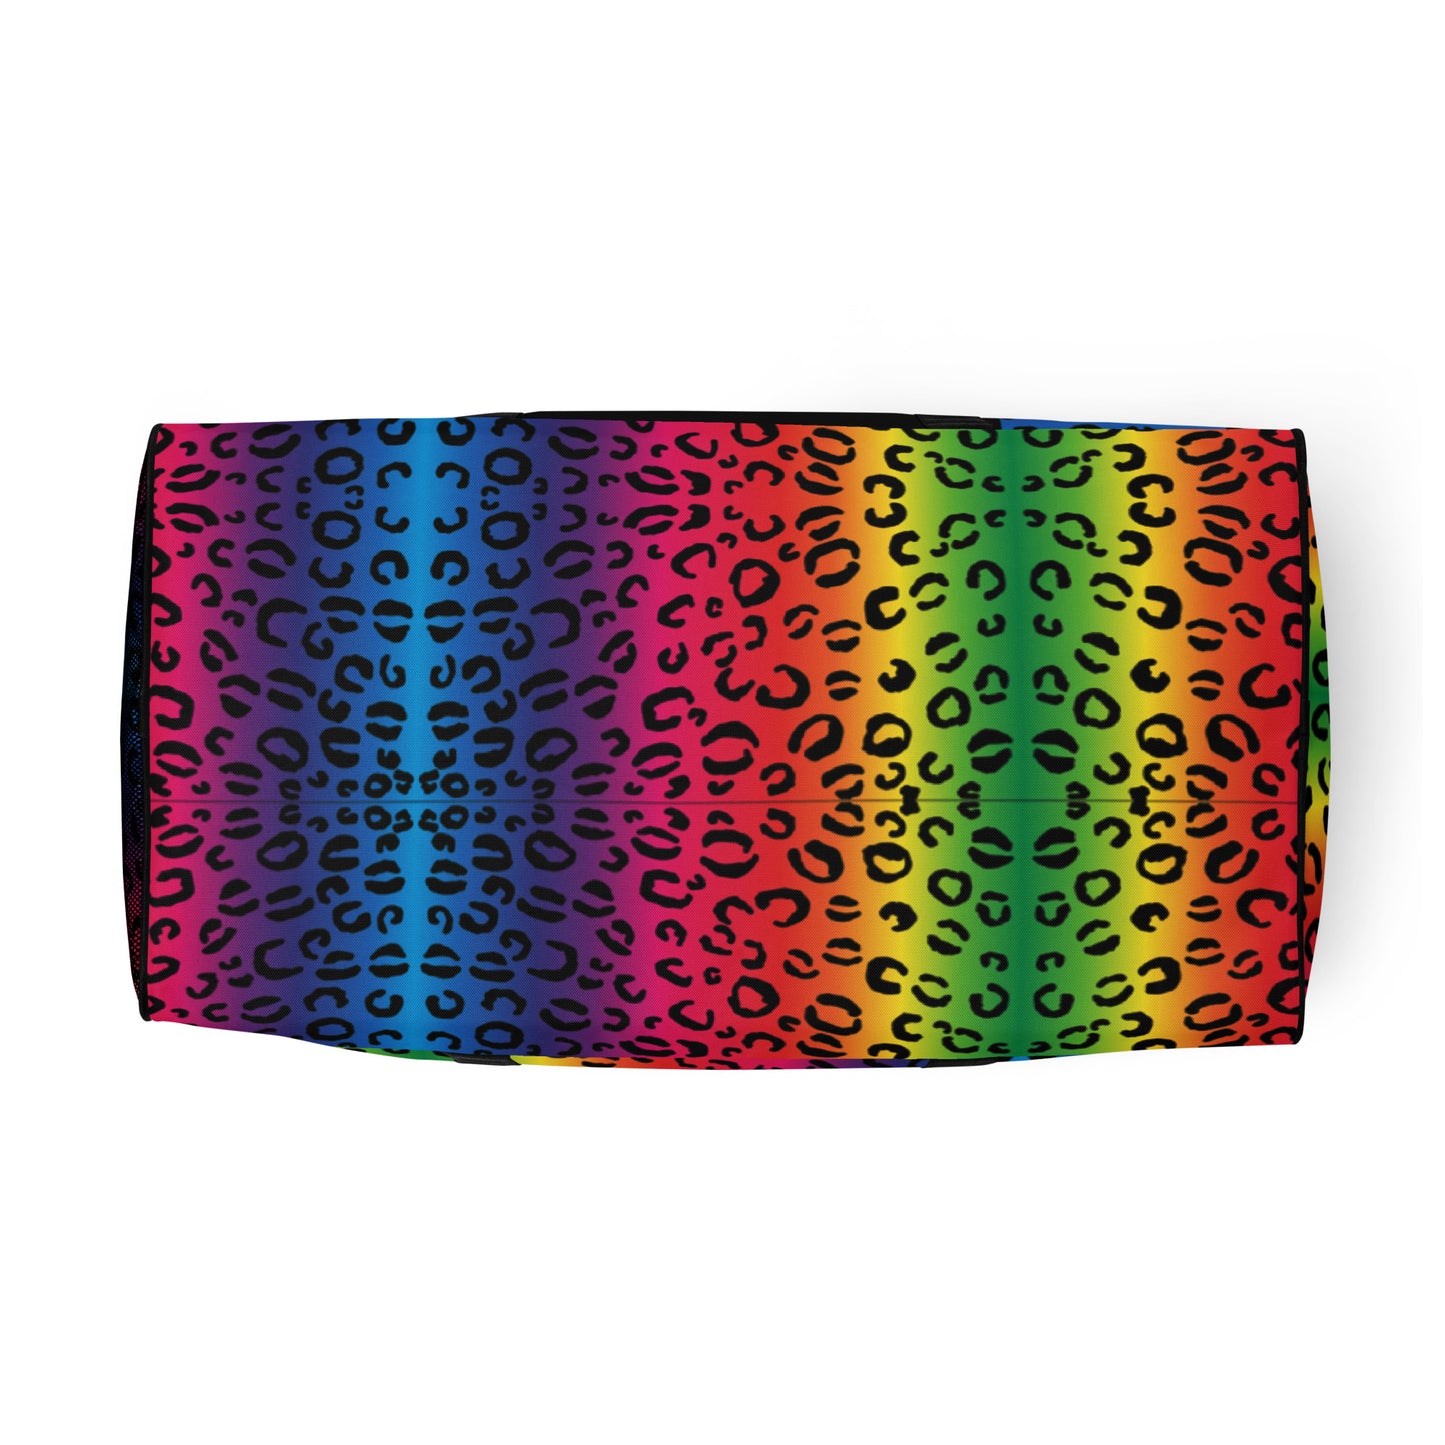 Rainbow Leopard Minimalist Duffle Bag - HipHatter